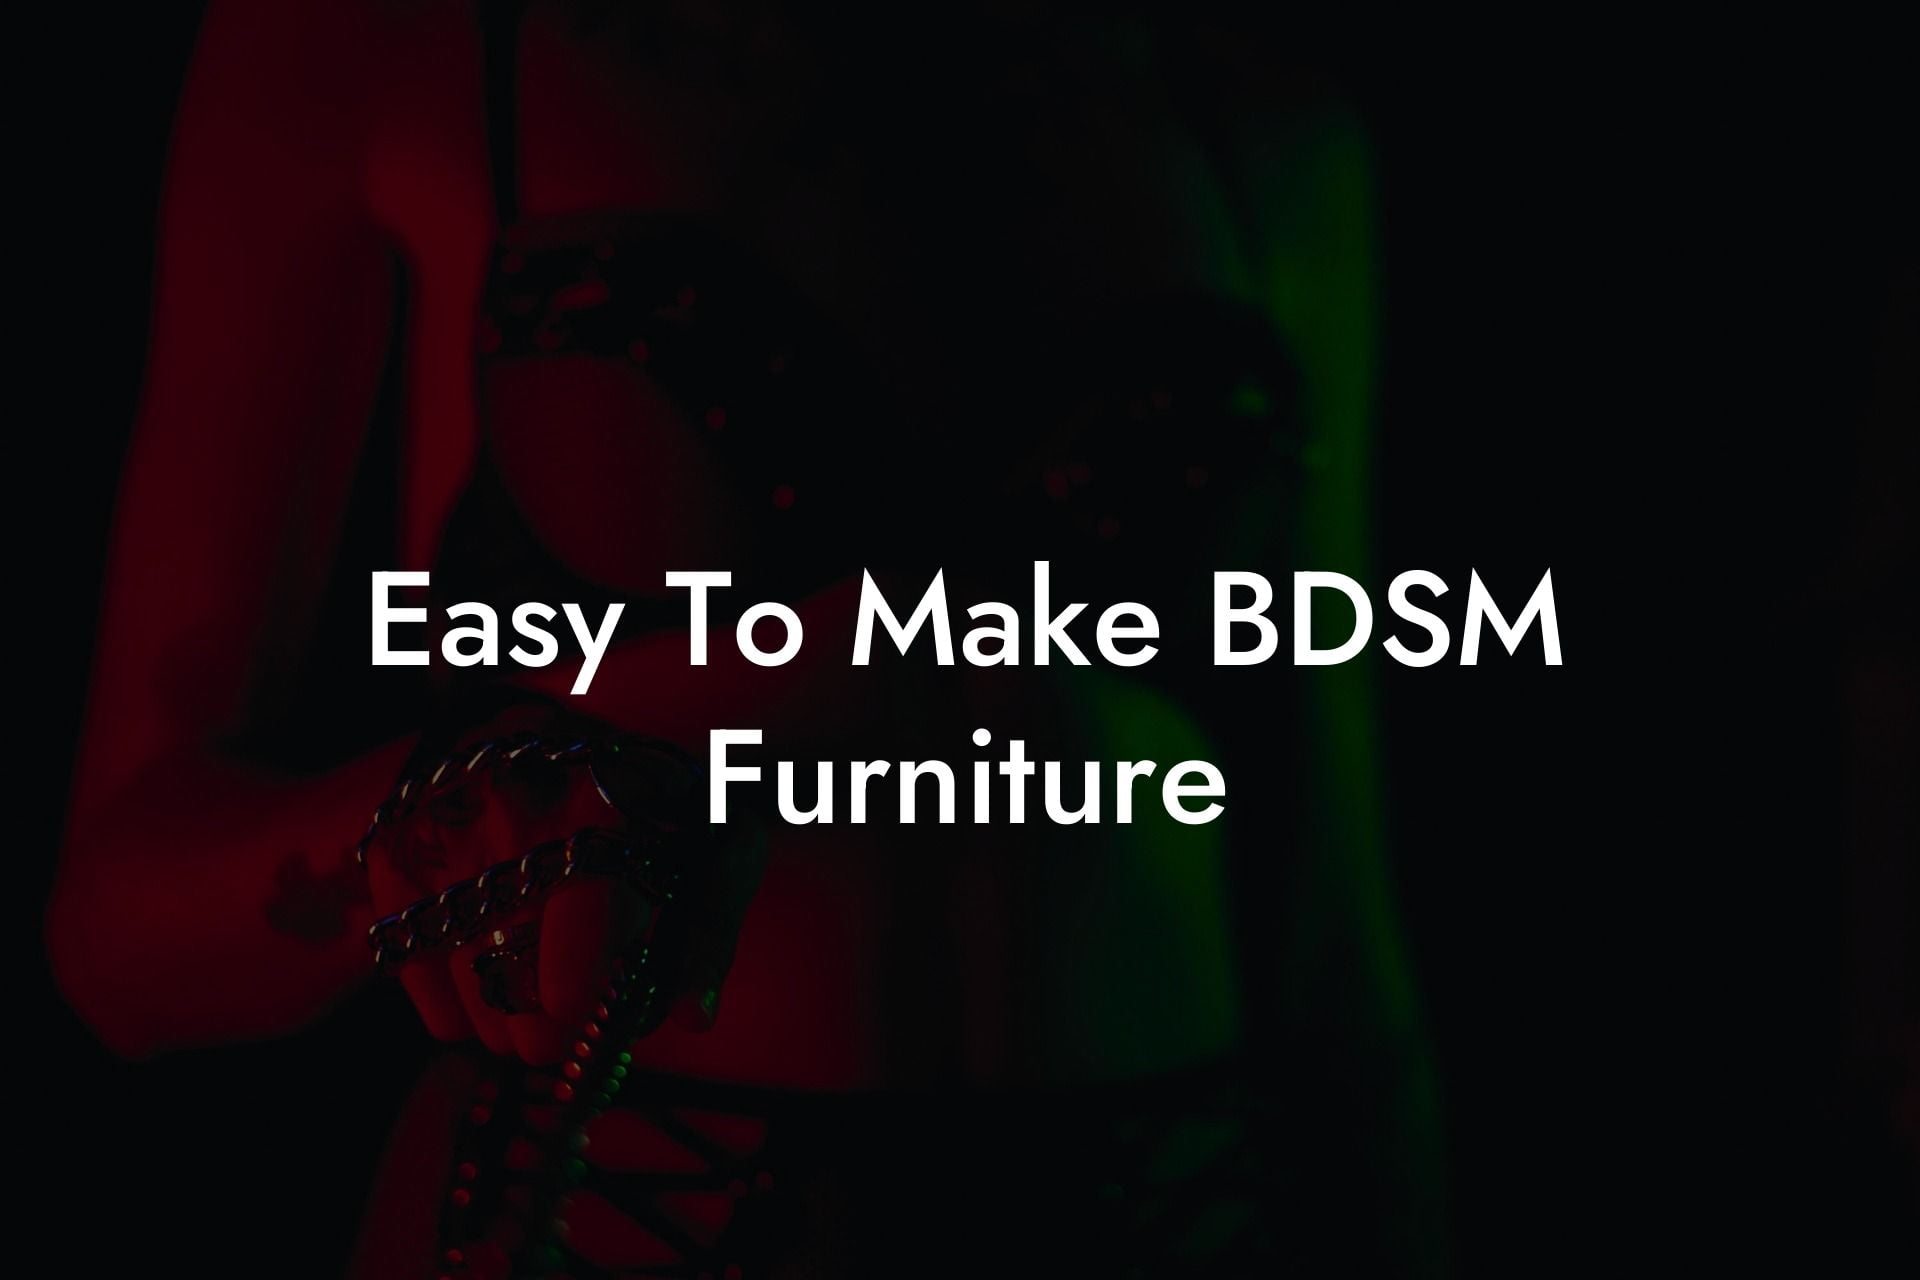 Easy To Make BDSM Furniture